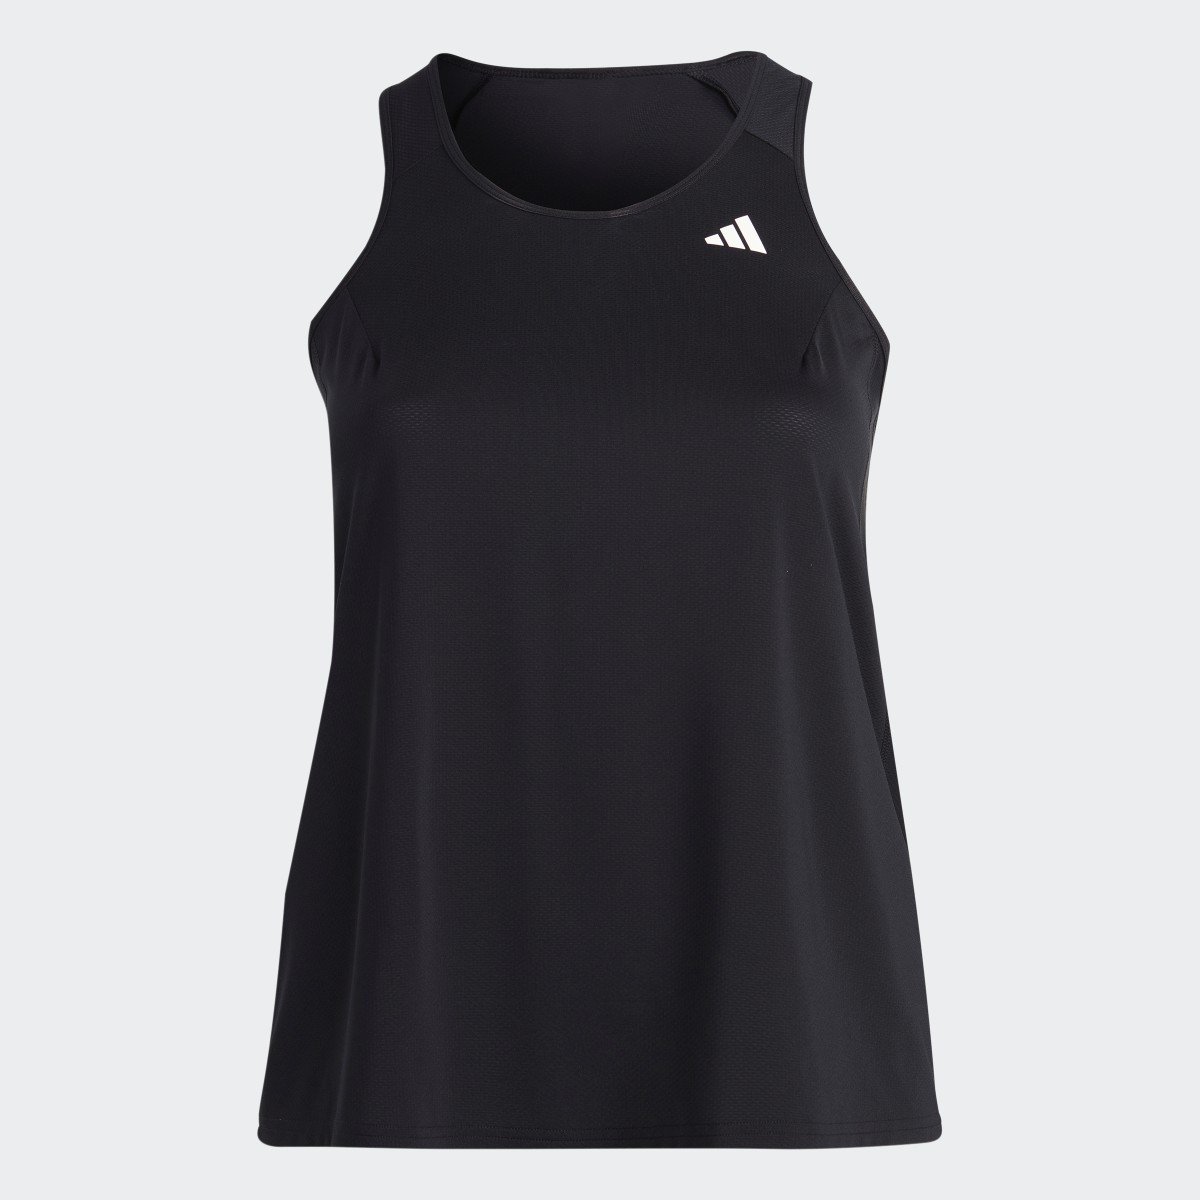 Adidas Camiseta sin mangas Own the Run Running (Tallas grandes). 5